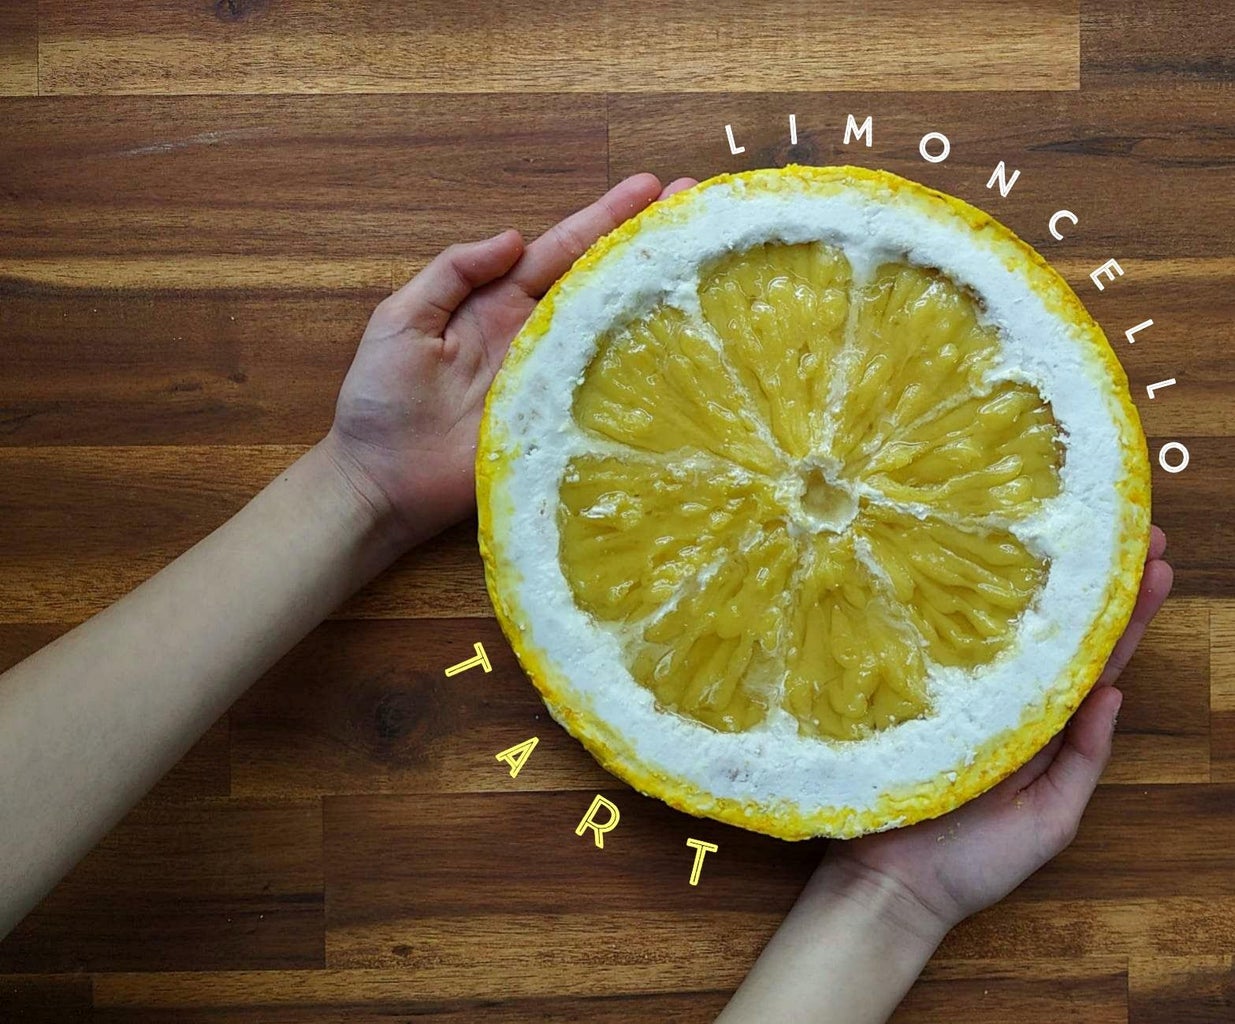 Giant Lemon Slice? It's a Limoncello Tart!